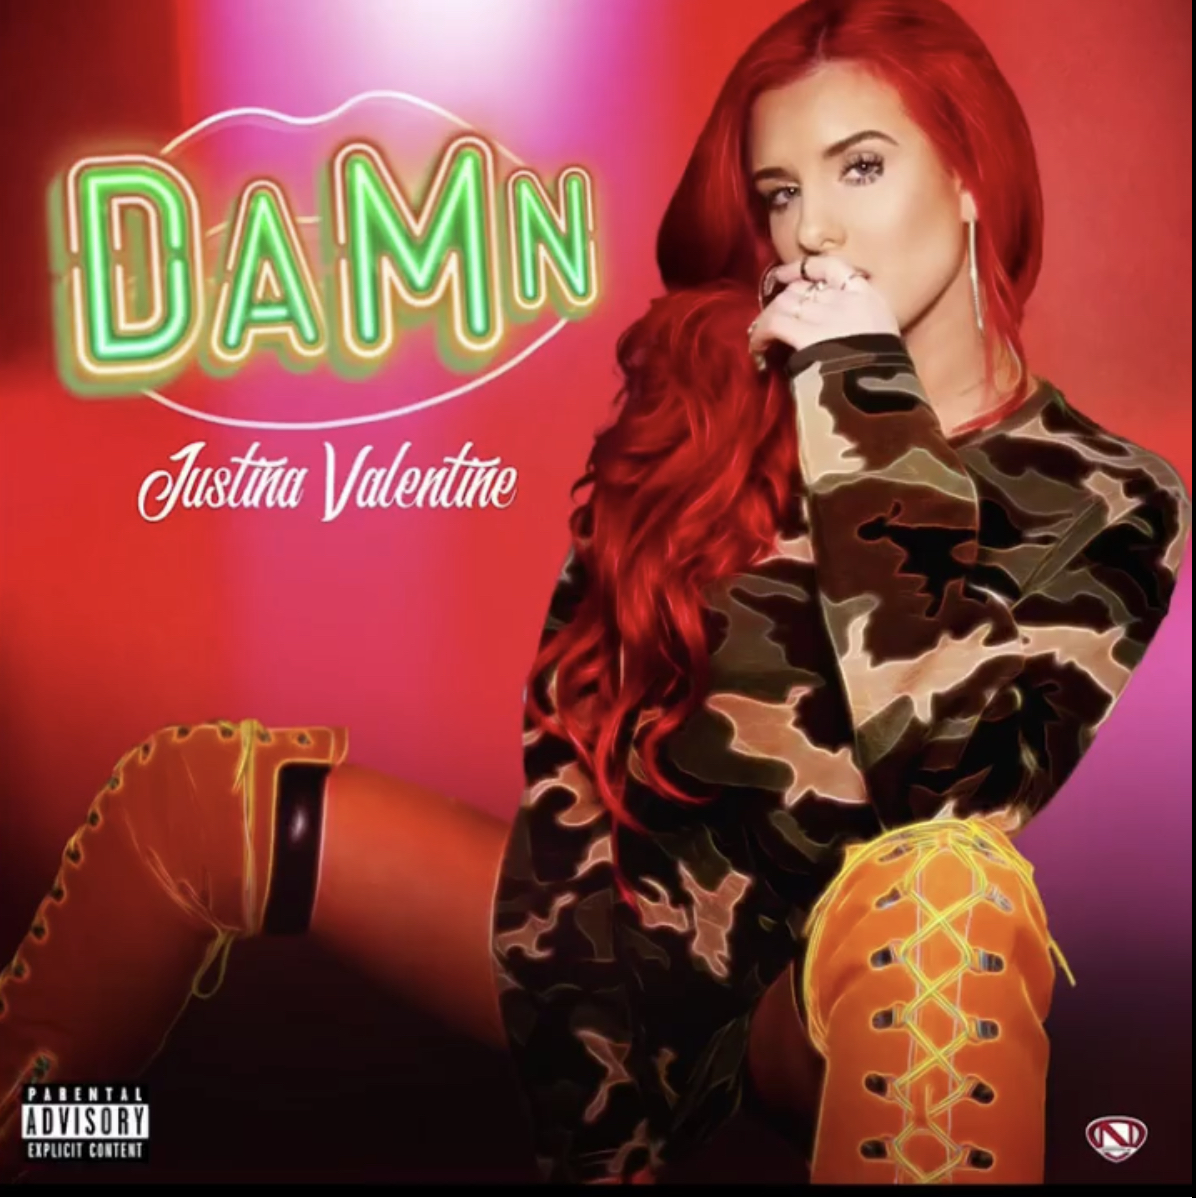 New Music: Justina Valentine drops new single “Damn”